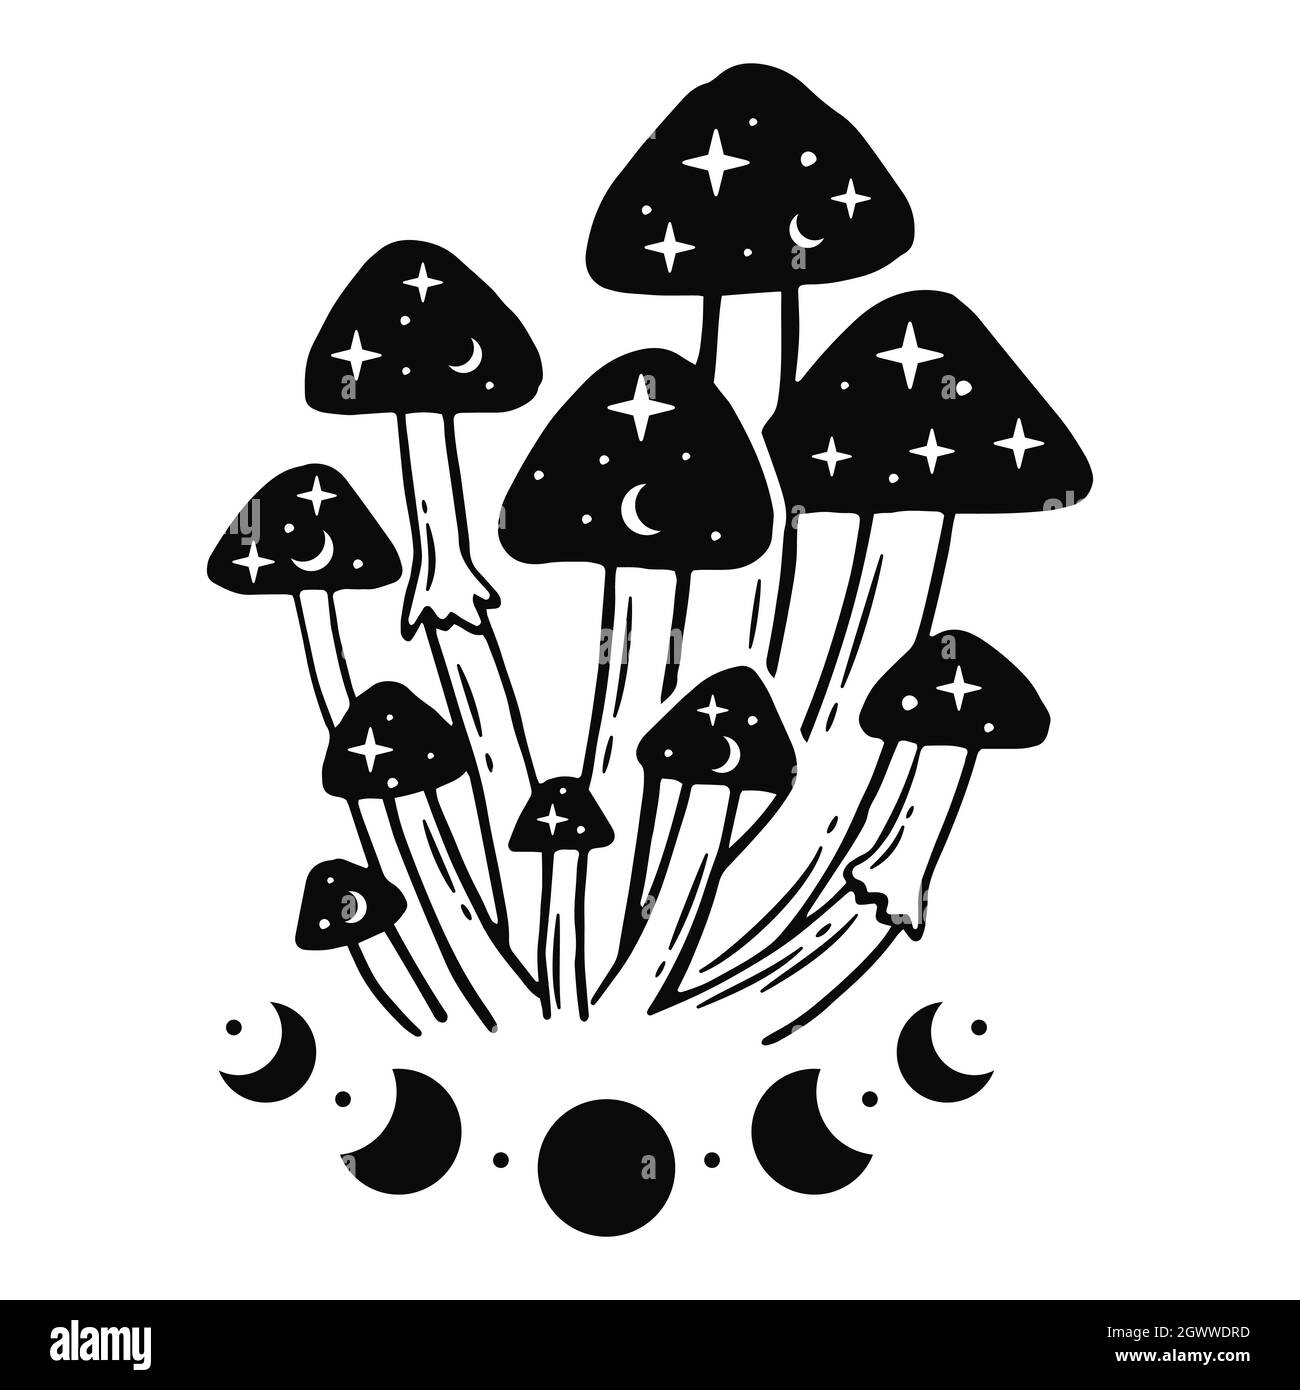 Symbolic mushroom Stock Vector Images - Alamy